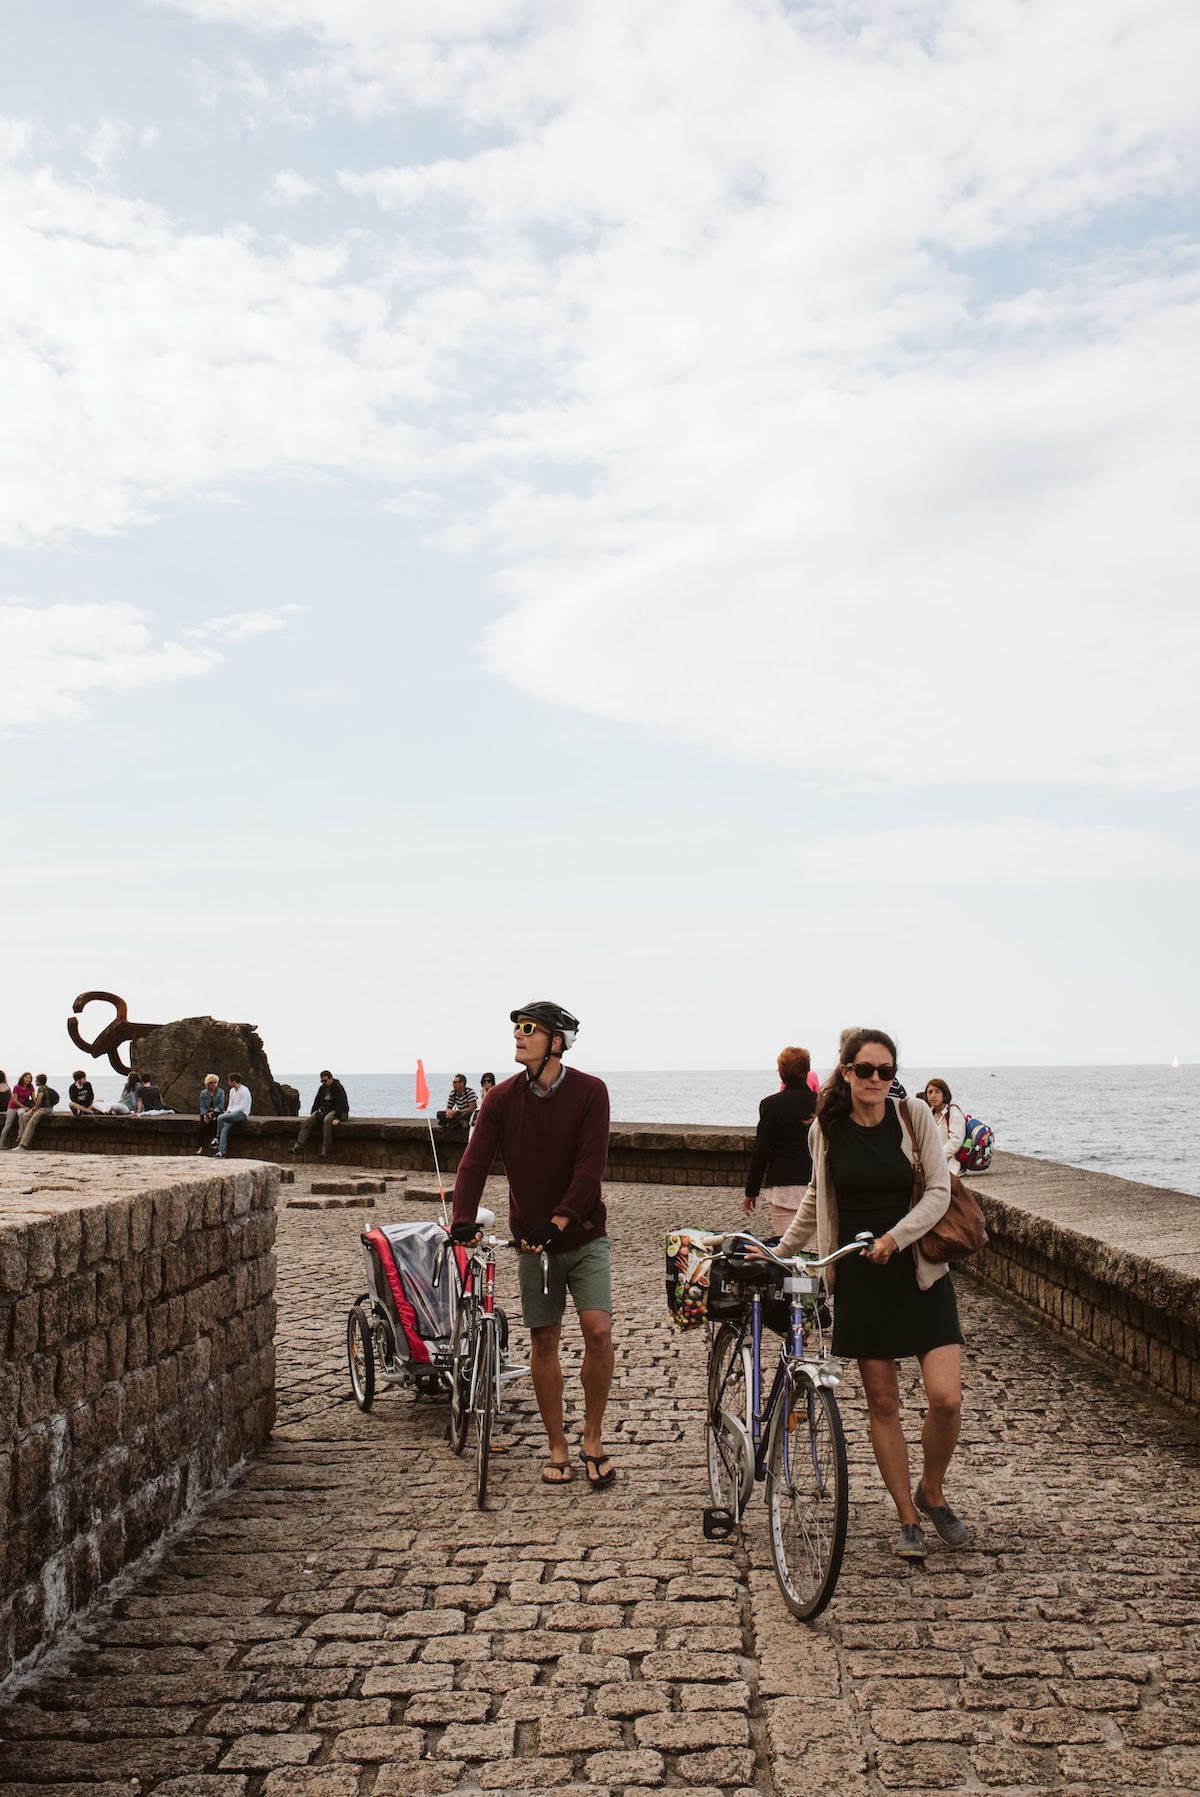 People walking their bikes on a stone seaside path.